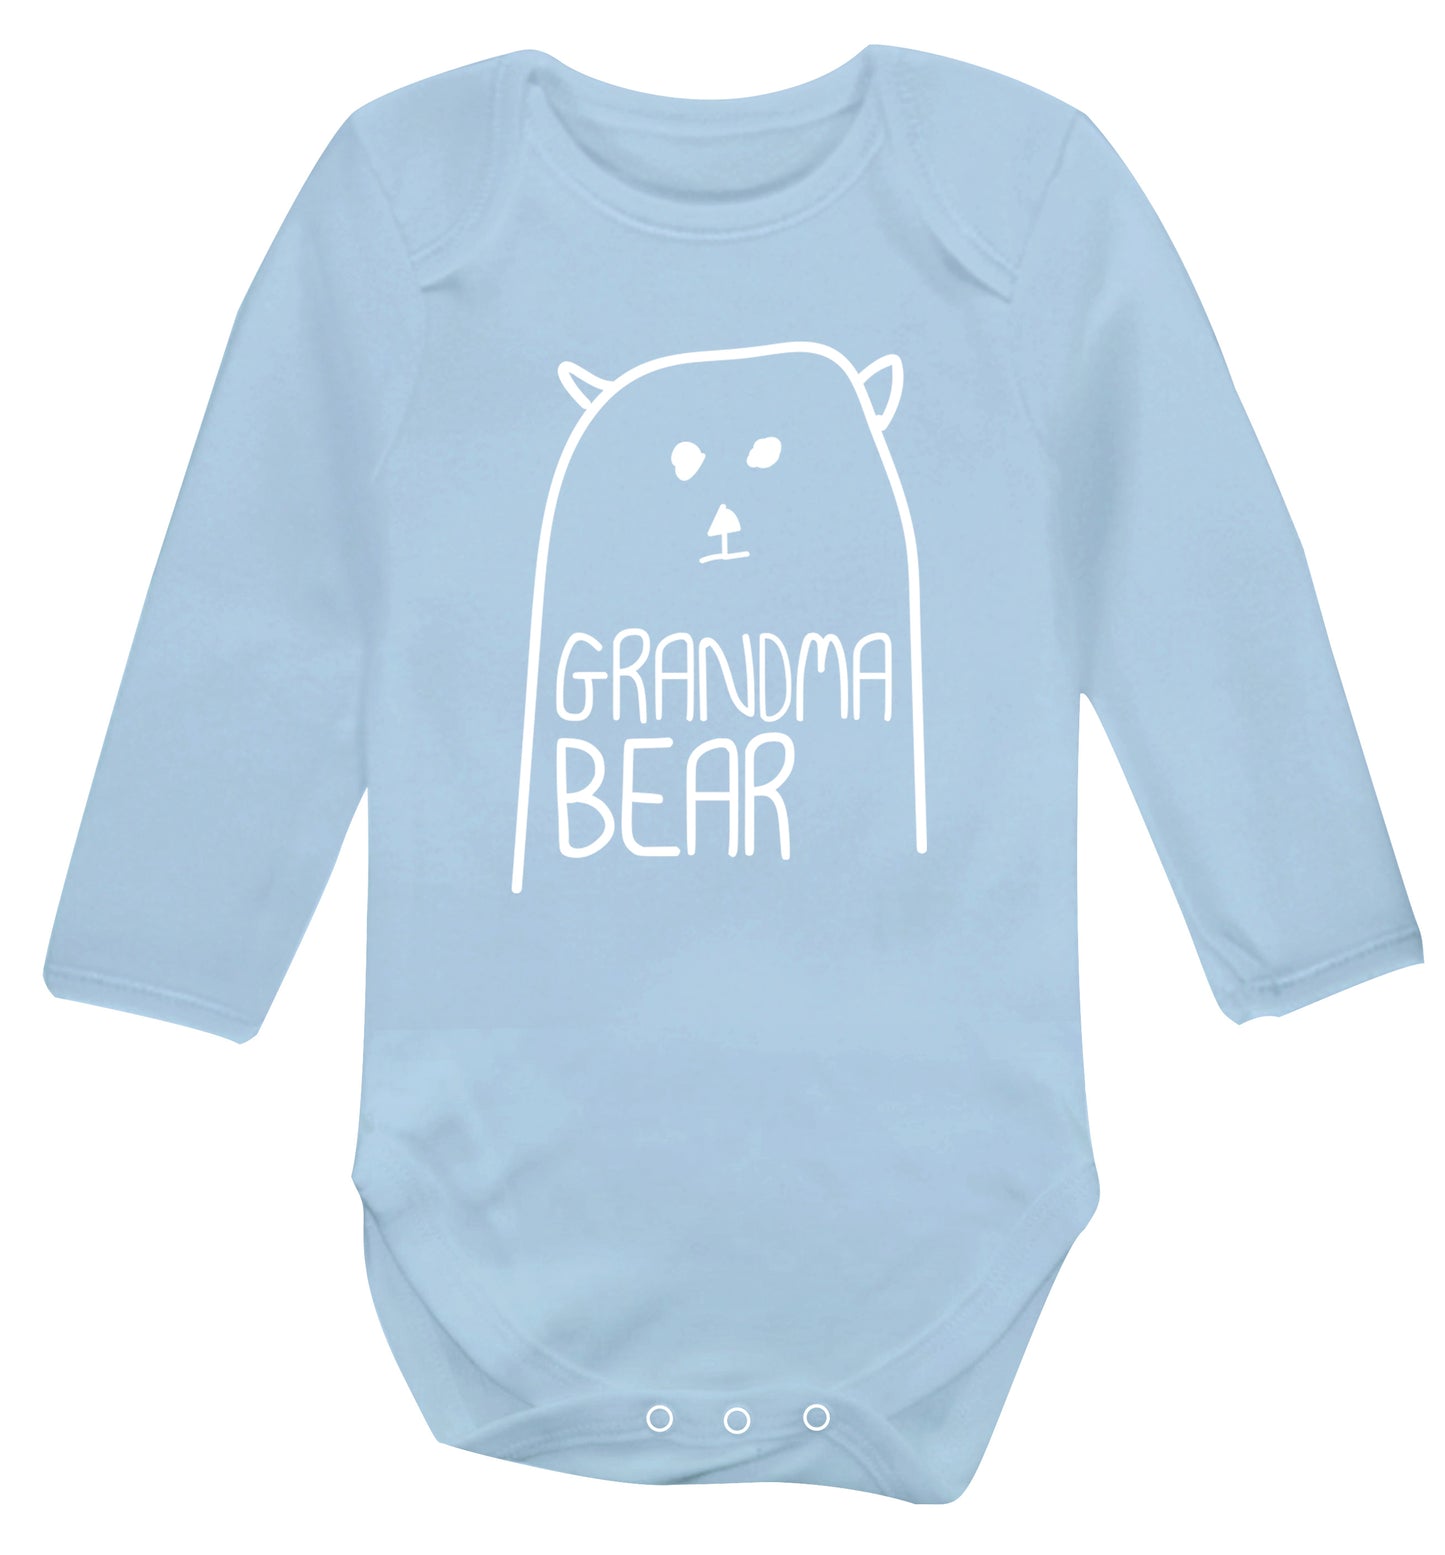 Grandma bear Baby Vest long sleeved pale blue 6-12 months